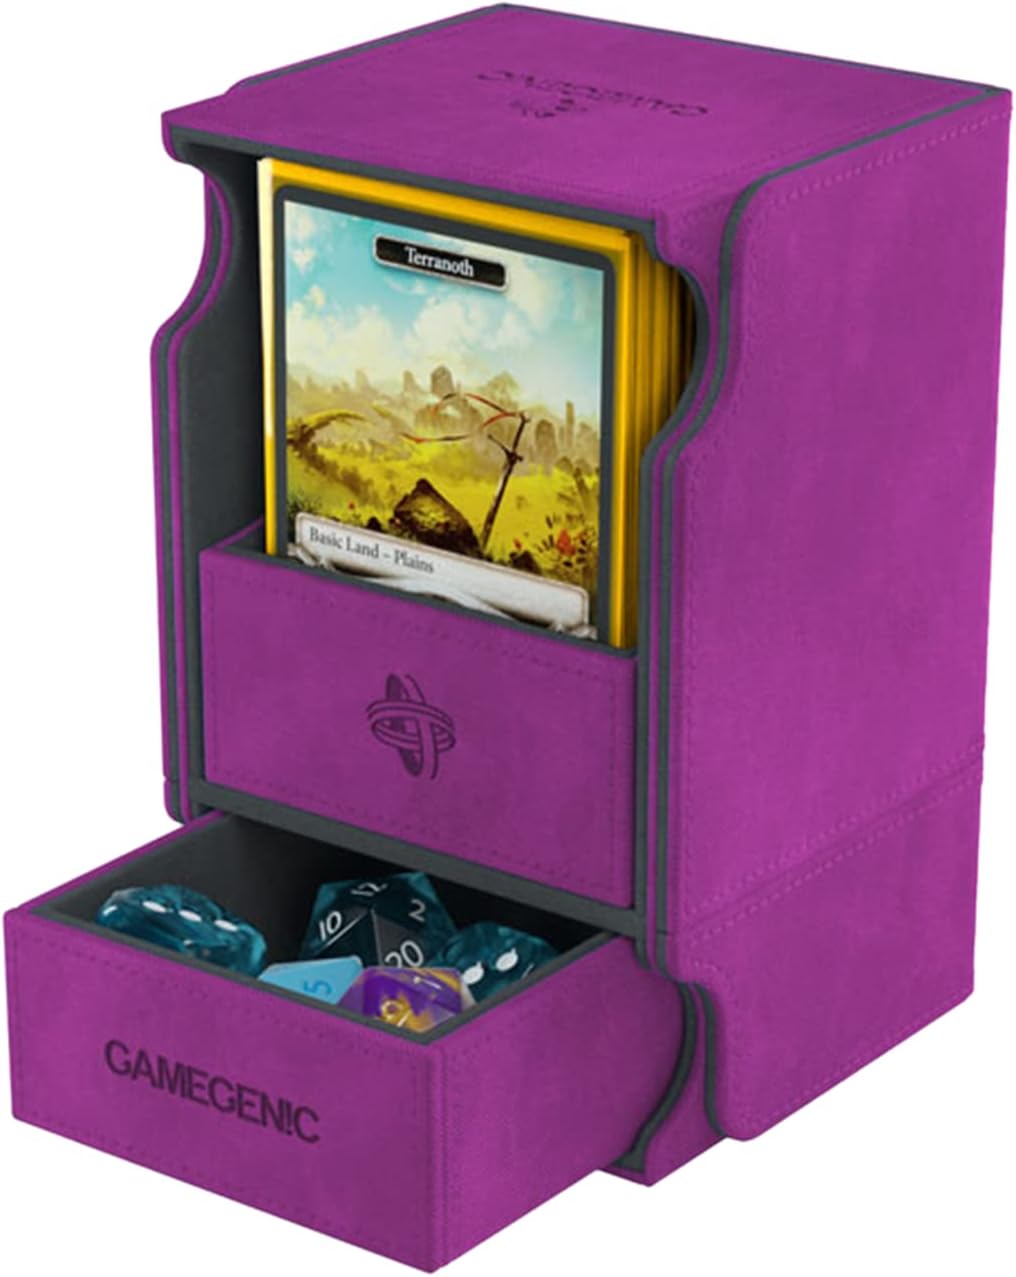 Gamegenic | UNIT Watchtower 100+ XL - Purple | Accessory